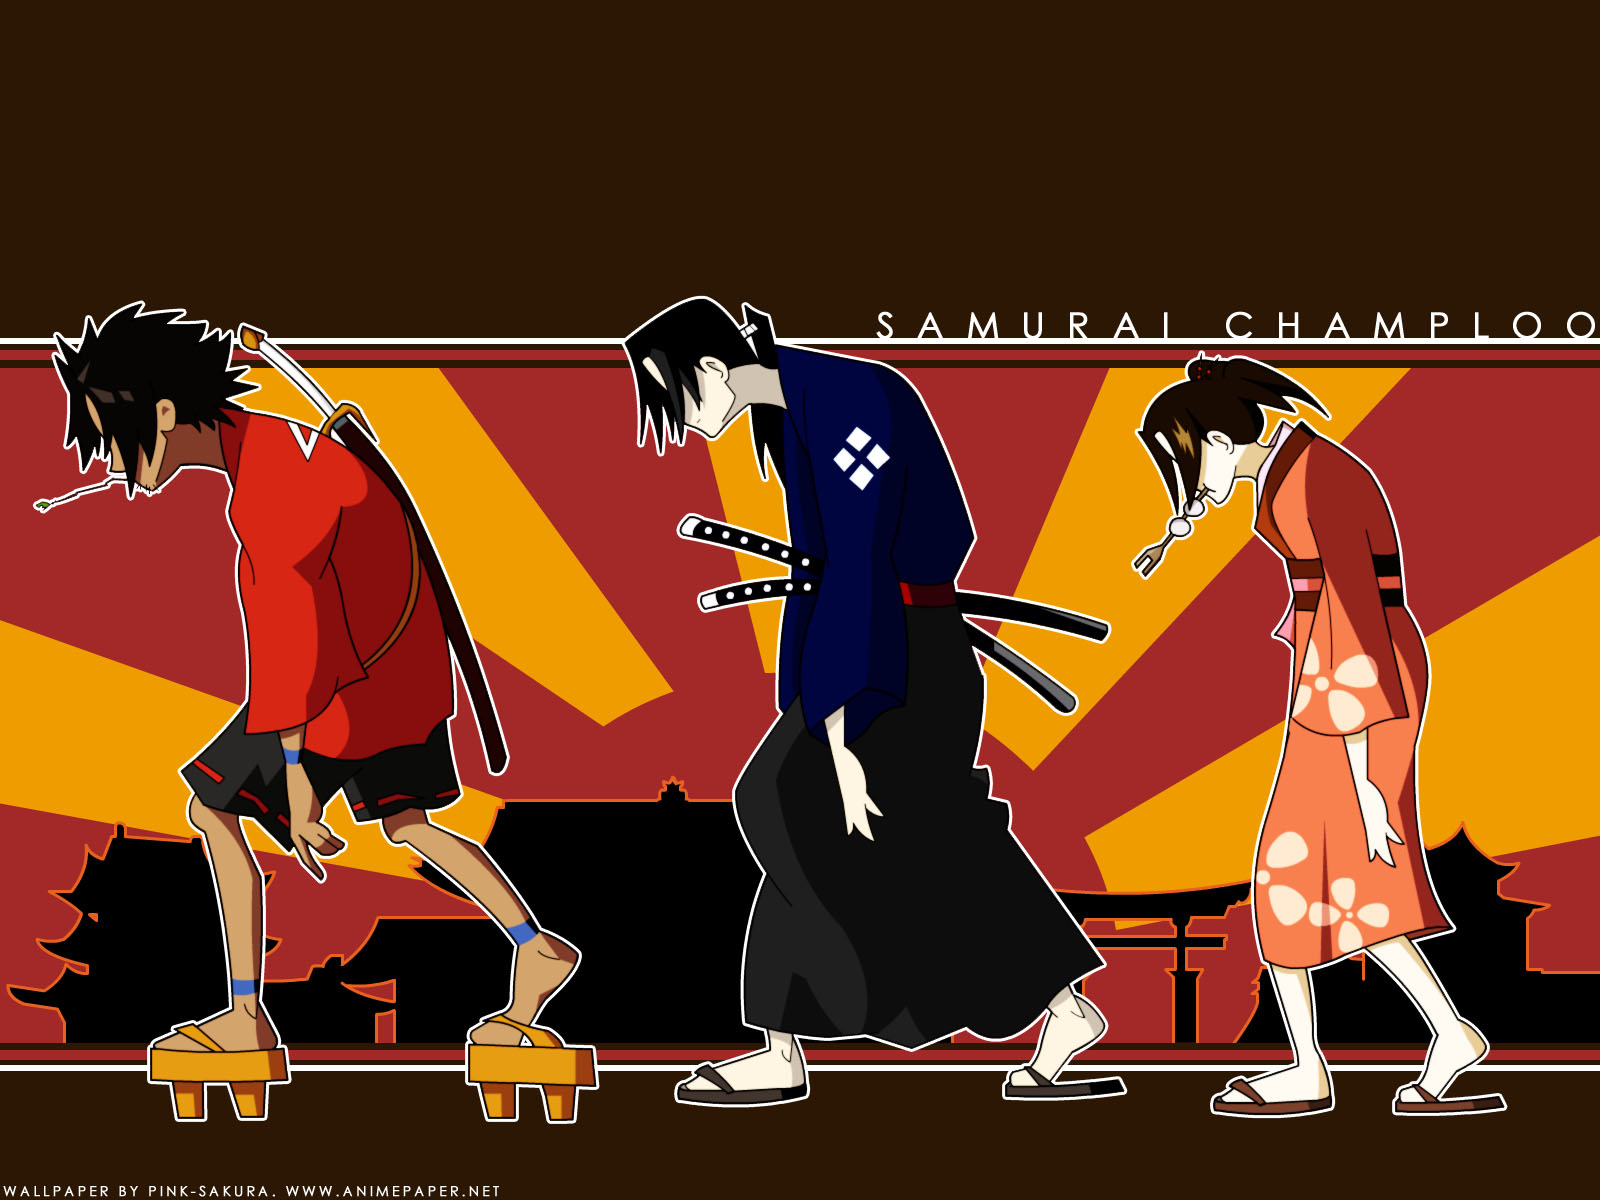 Samurai+champloo+wallpaper